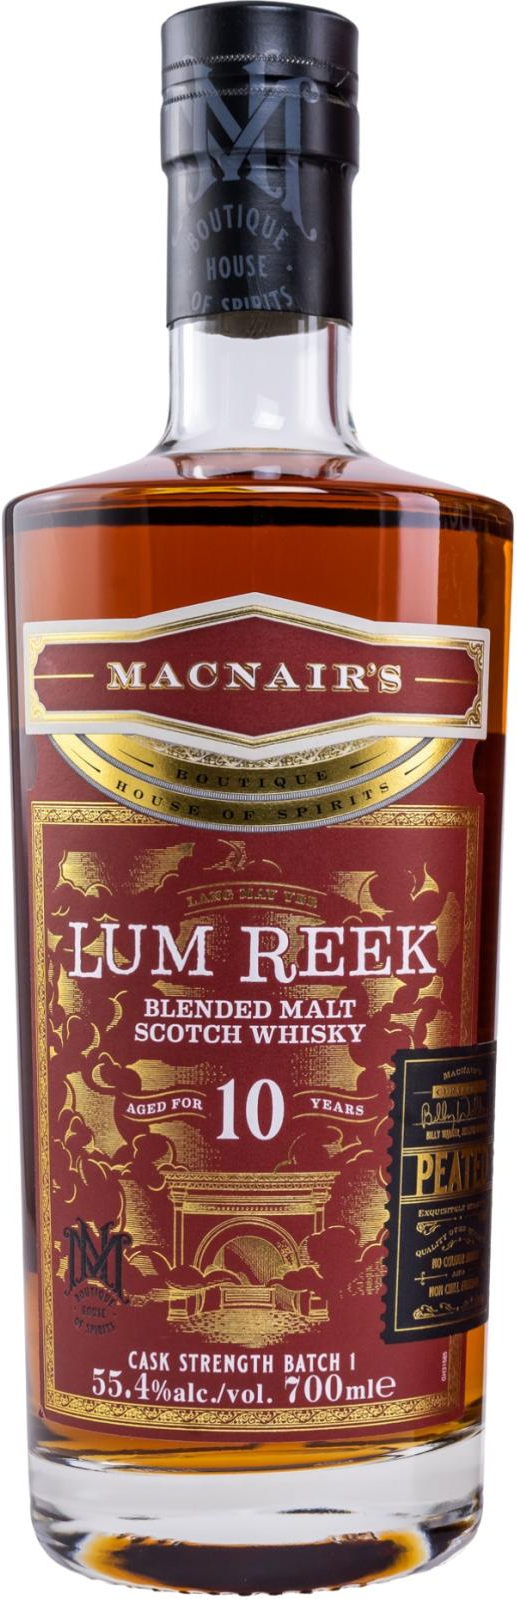 MacNair's Lum Reek 10 Year Old Cask Strength Blended Scotch Malt Whisky 700ml